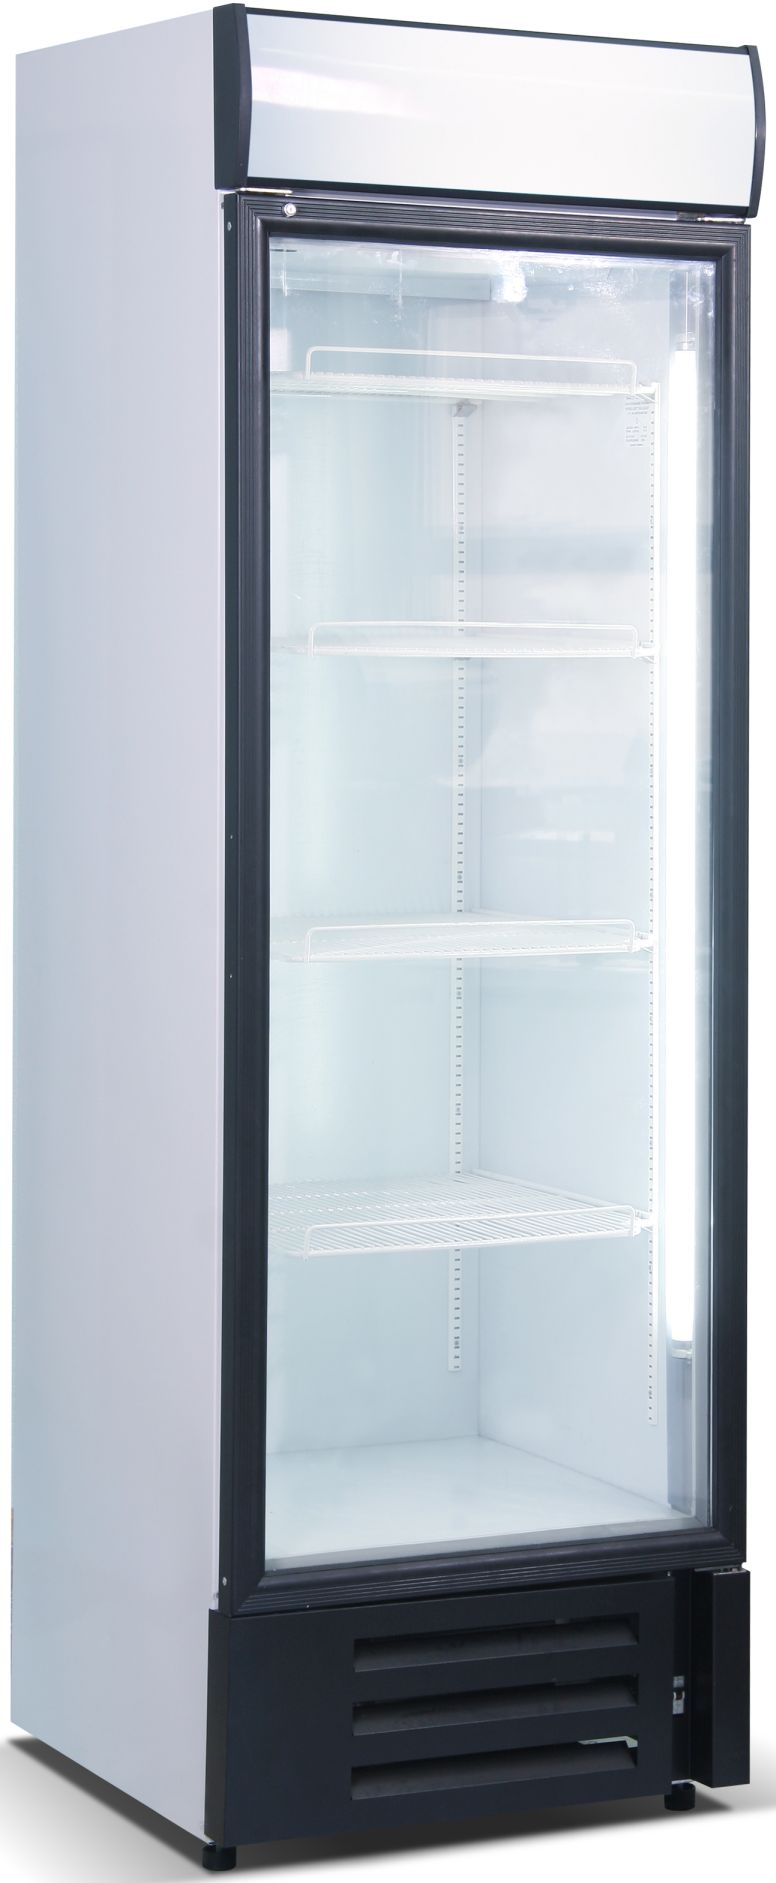 Inter 400t холодильник